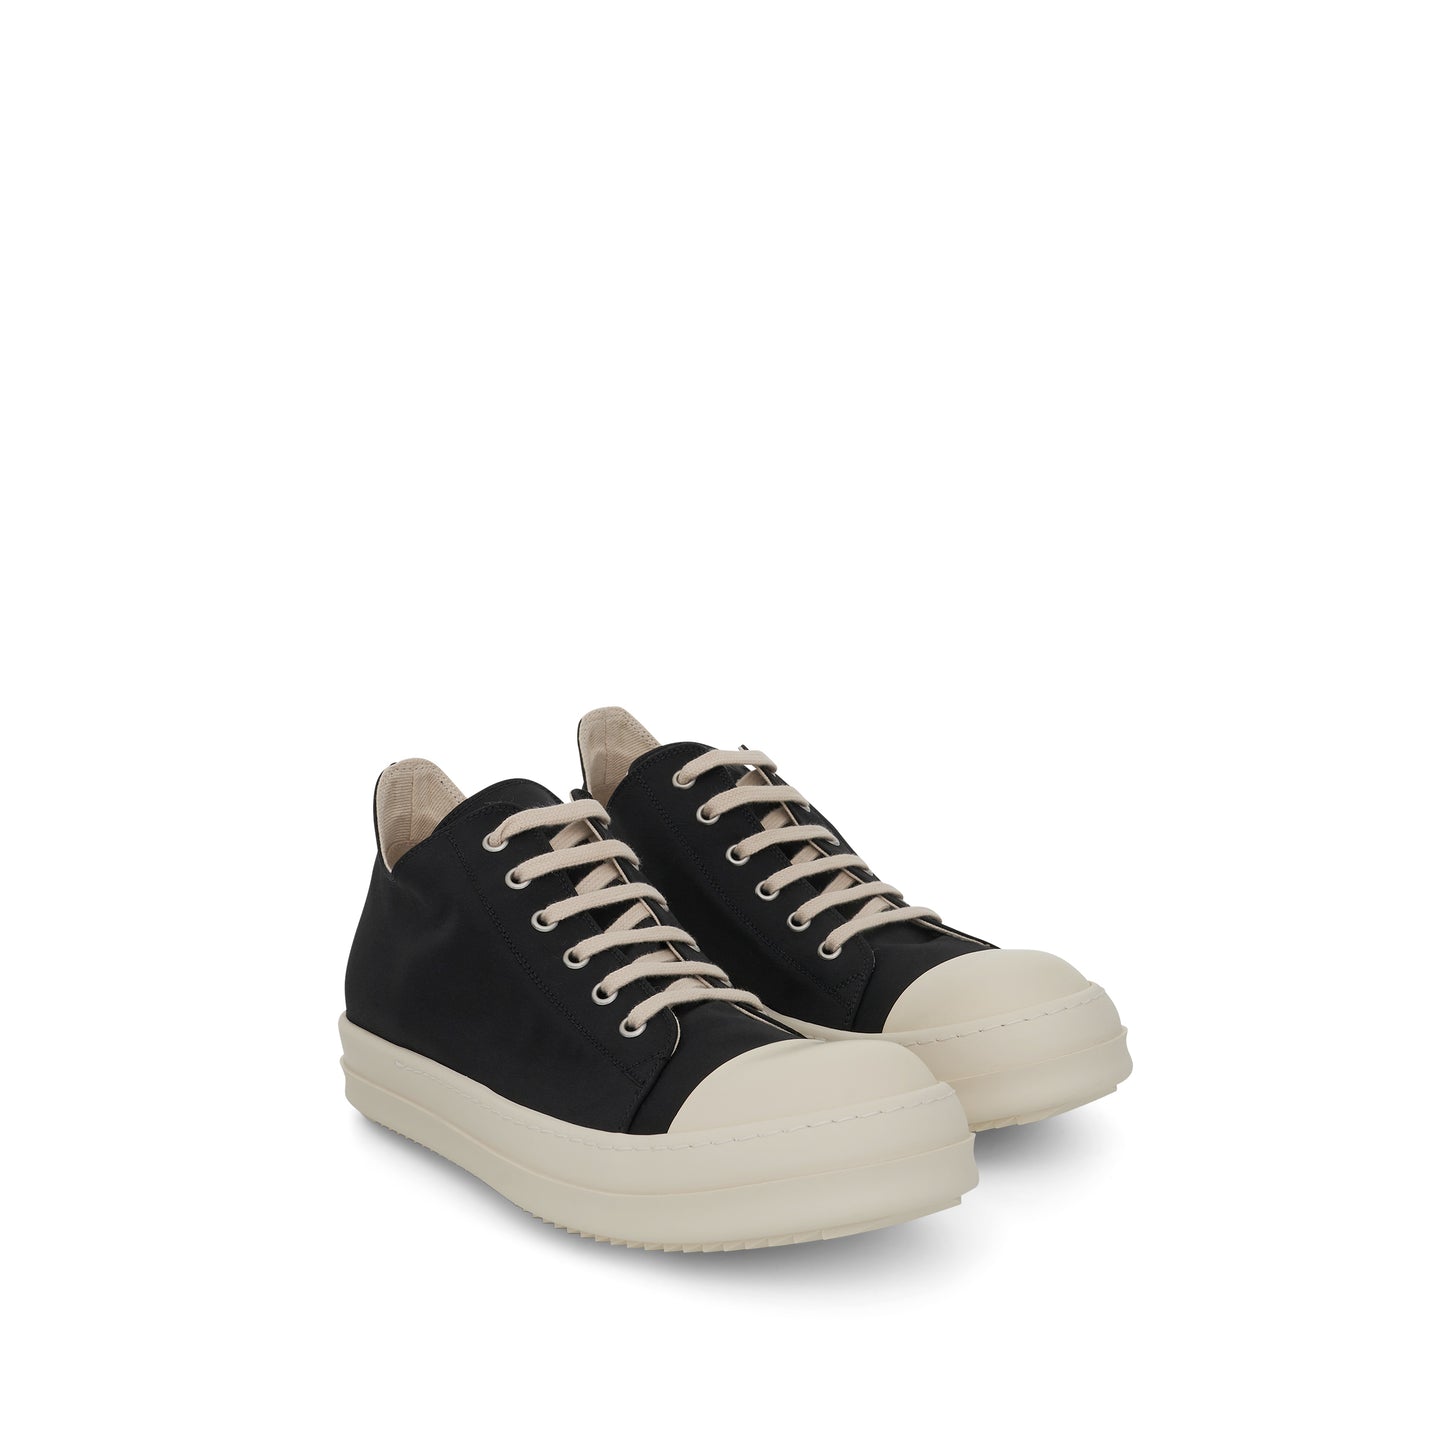 DRKSHDW Ramones Cotton Nylon Low Sneaker in Black/Milk